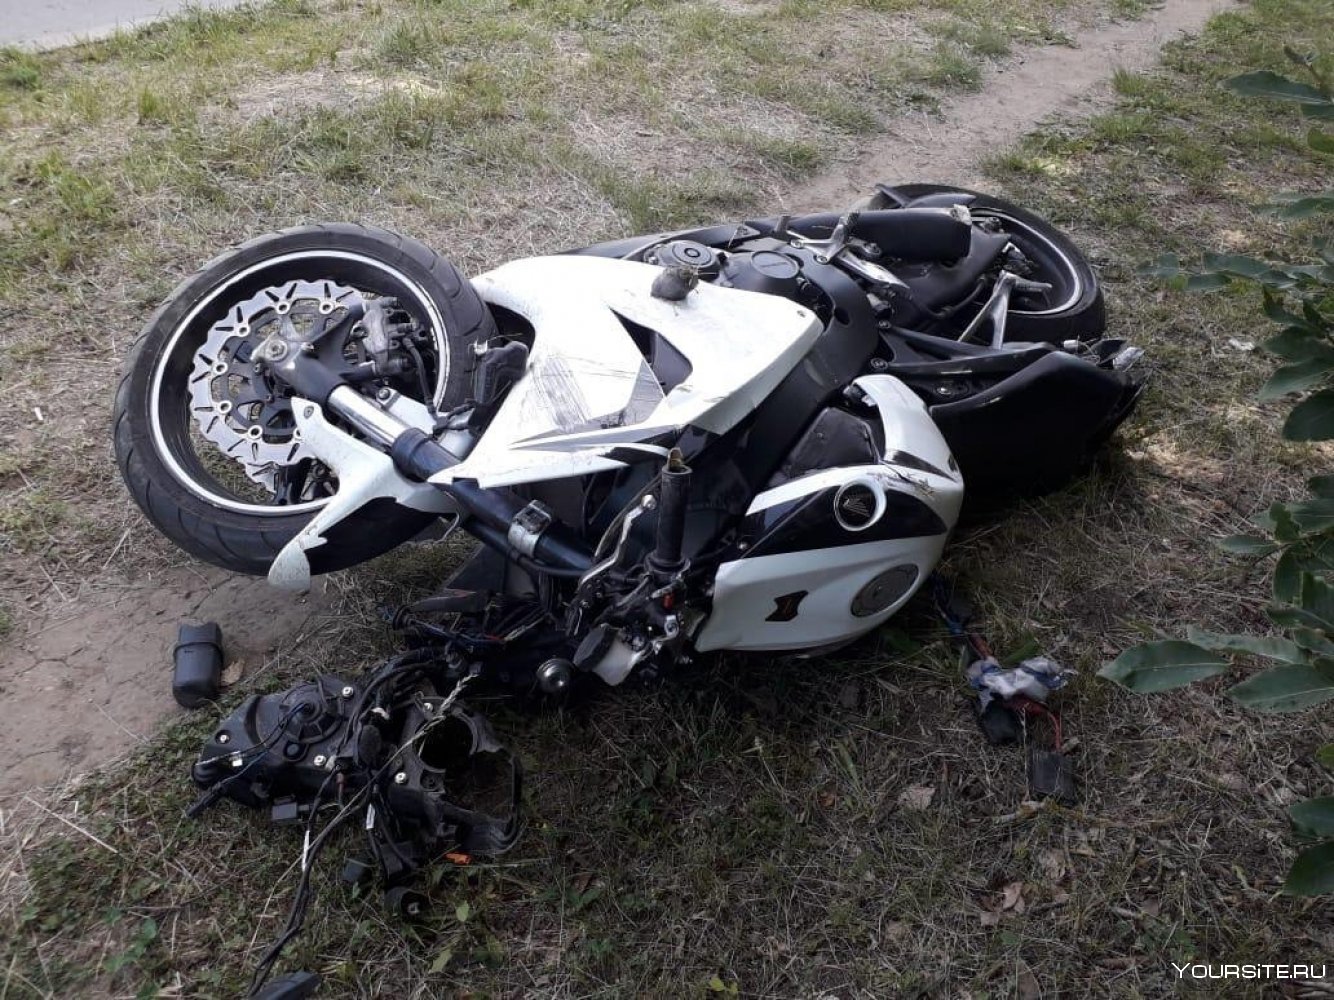 Мотоцикл после аварии. Разбитый мотоцикл Ямаха р1. Разбитый мотоцикл Кавасаки.